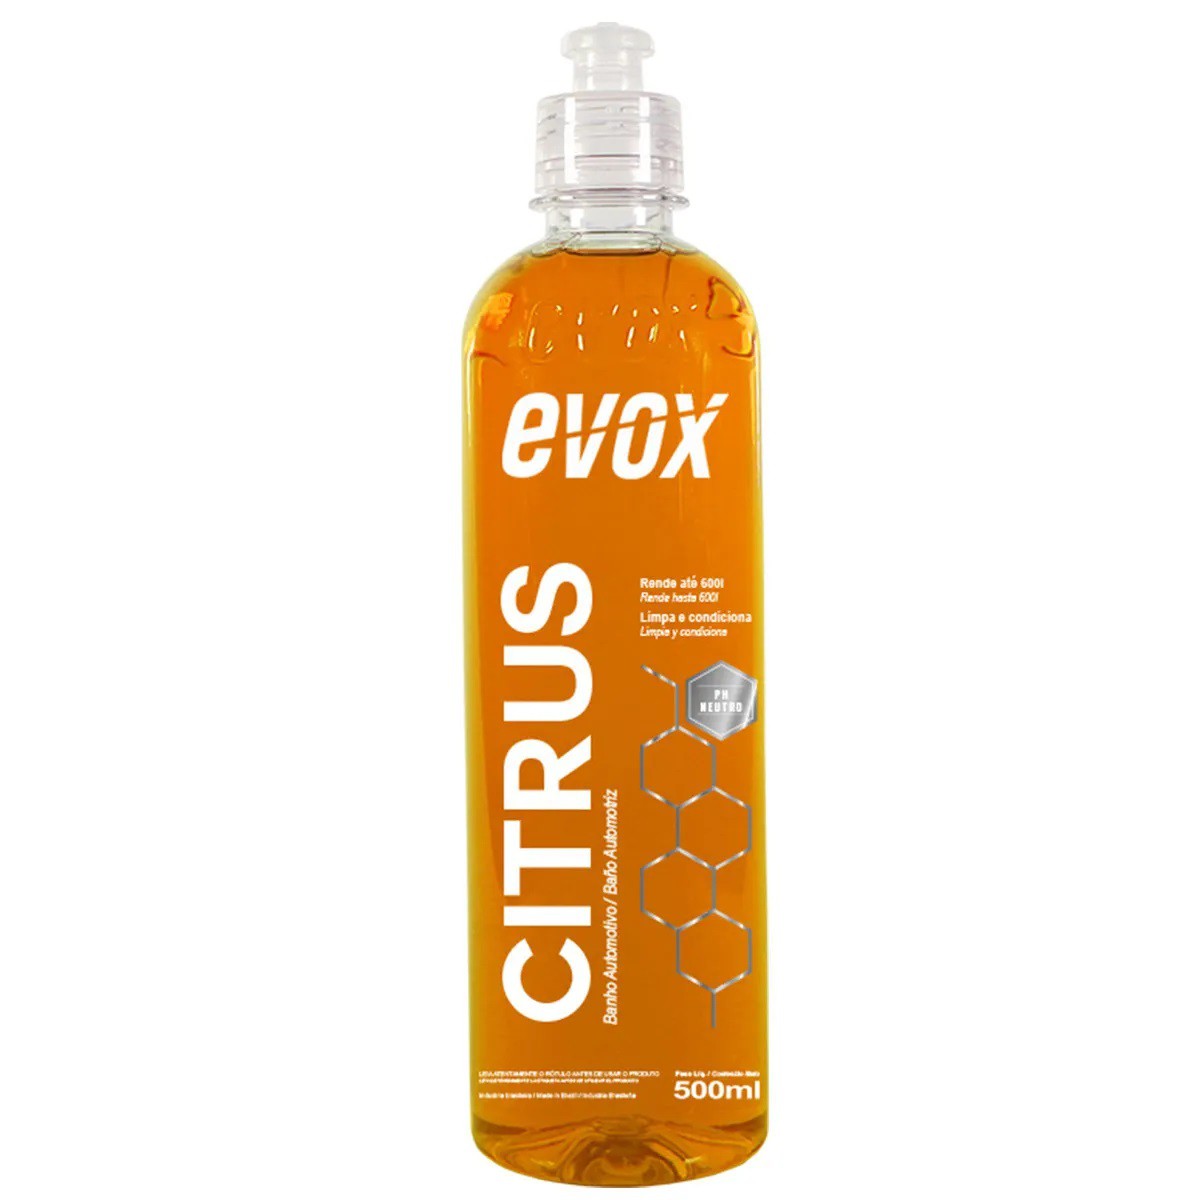 Shampoo Automotivo Citrus 500ml Evox